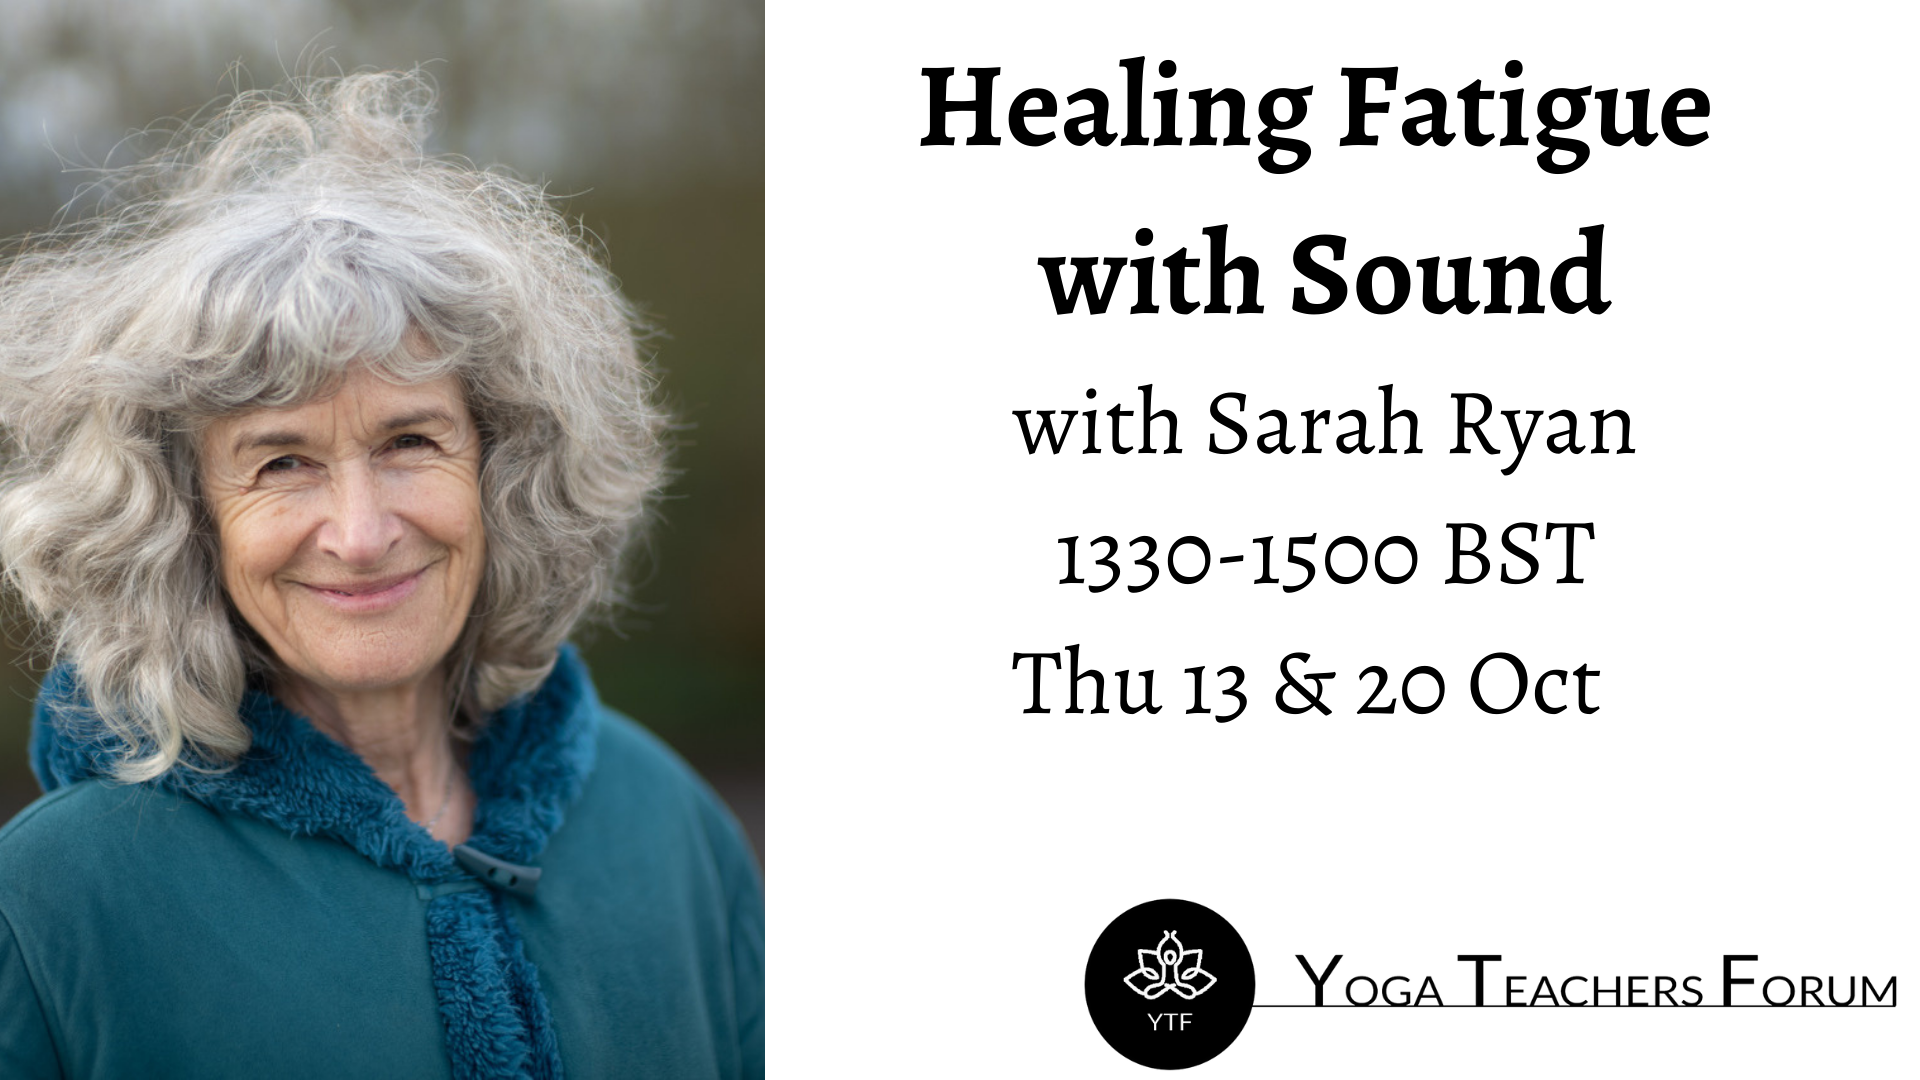 Healing Fatigue with Sound with Sarah Ryan